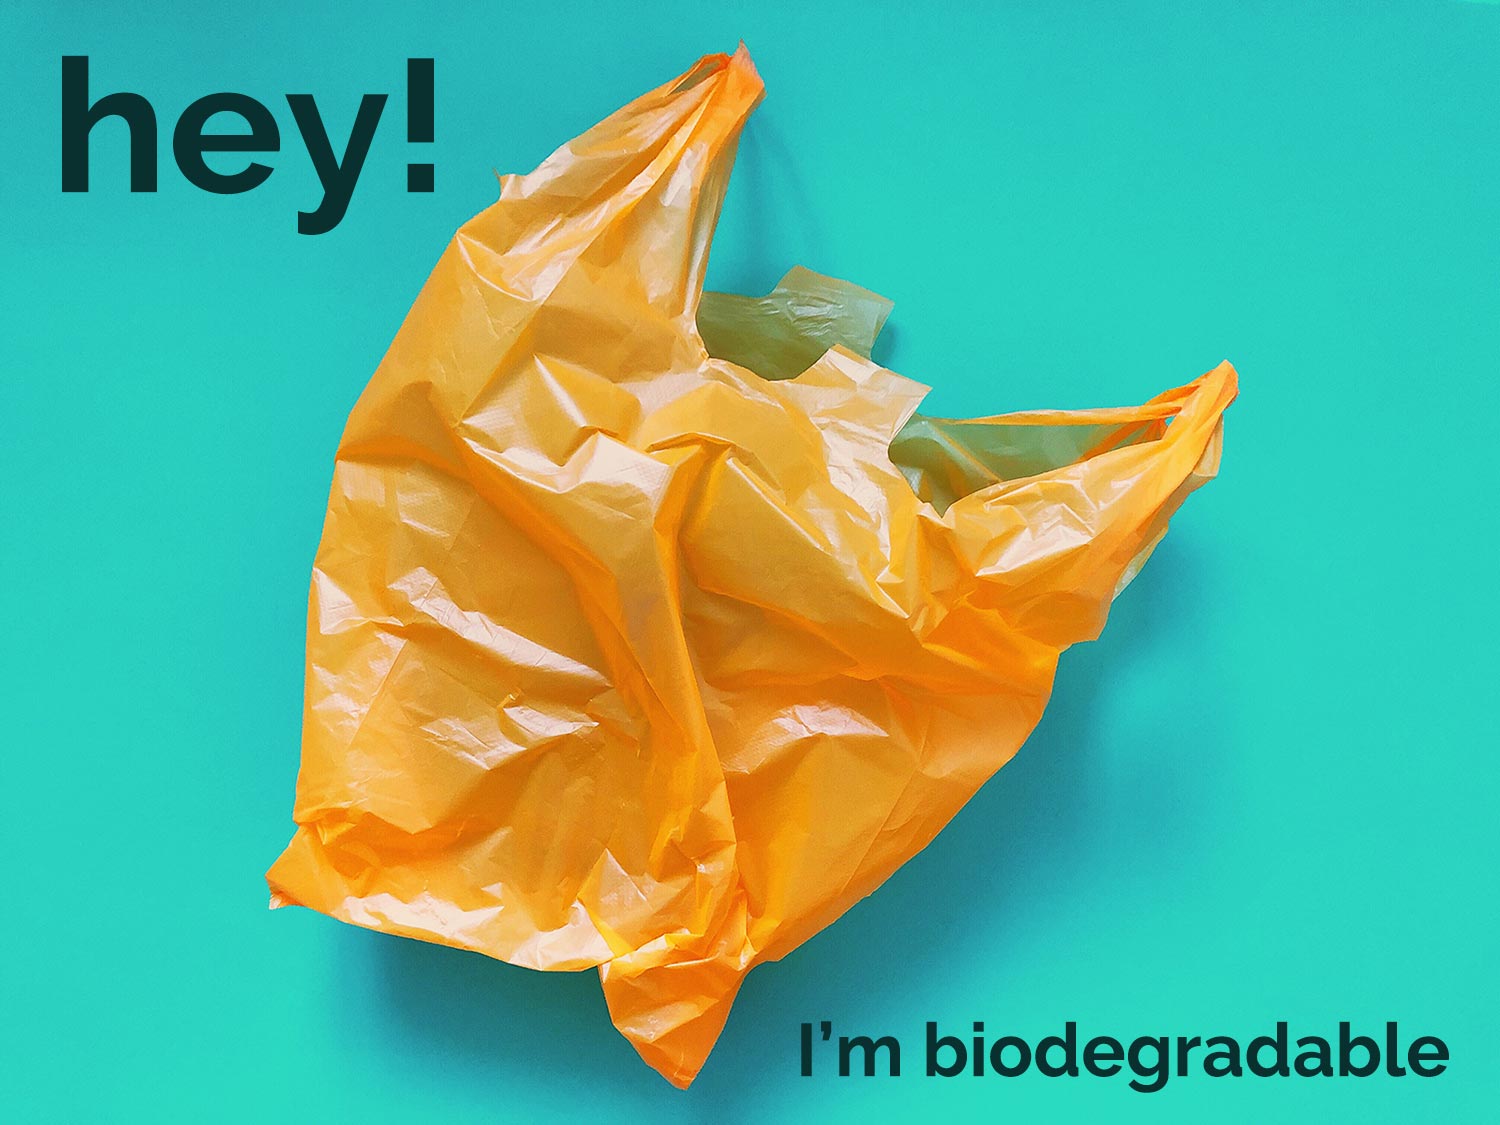 Greenwashing Alert: Beware of Biodegradable Claims